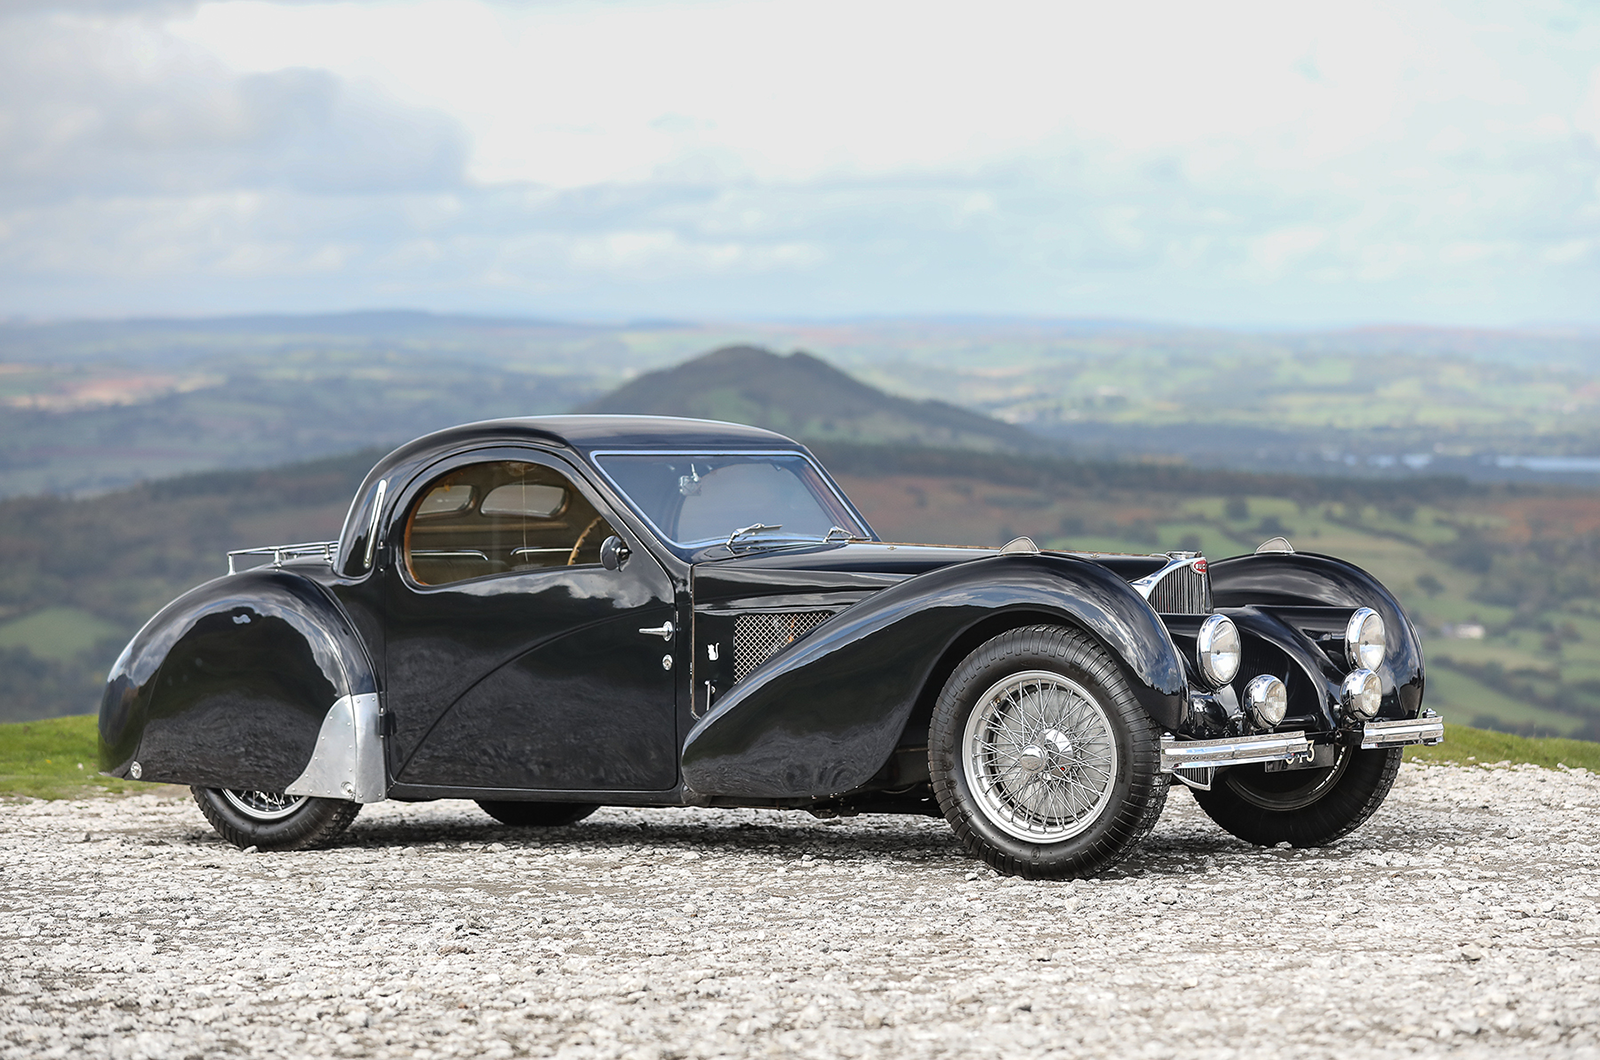 The stunning Bugatti Type 57S Atalante